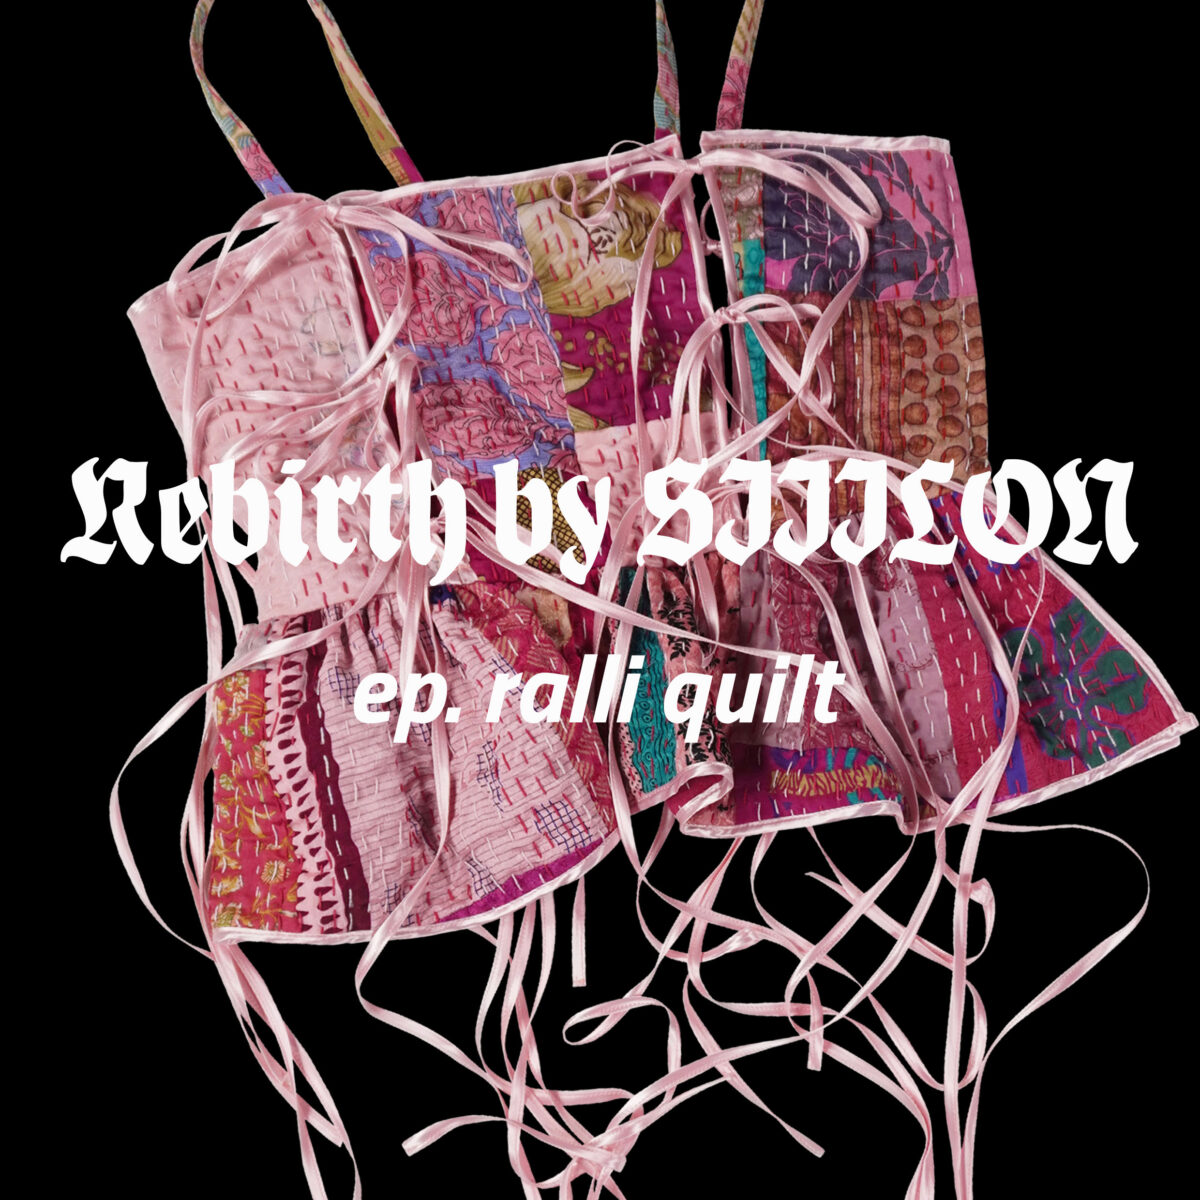 SIIILONからラリーキルトを再構築した限定コレクション「Rebirth by SIIILON - ep. Ra...